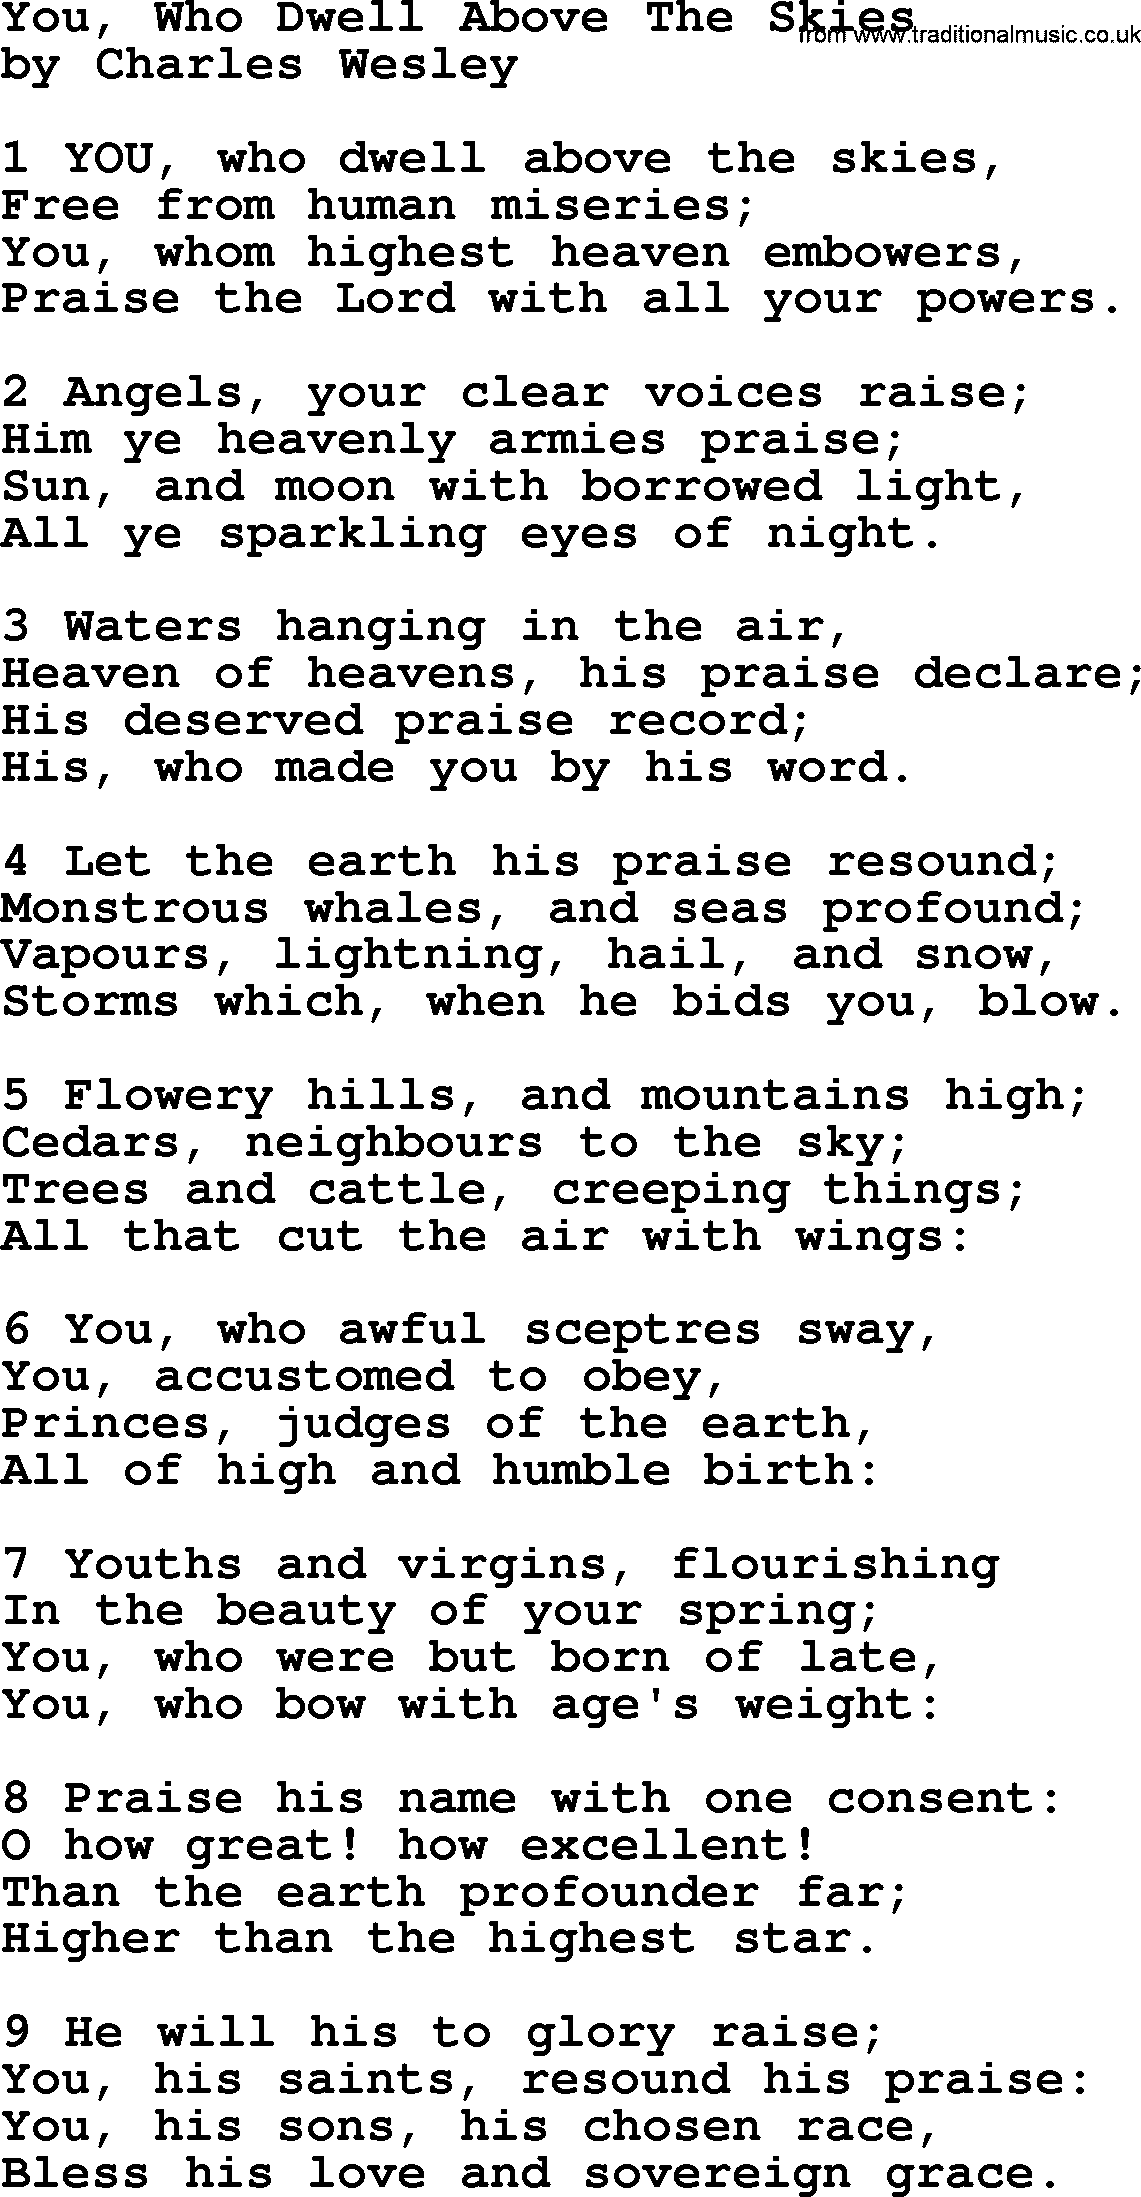 Charles Wesley hymn: You, Who Dwell Above The Skies, lyrics